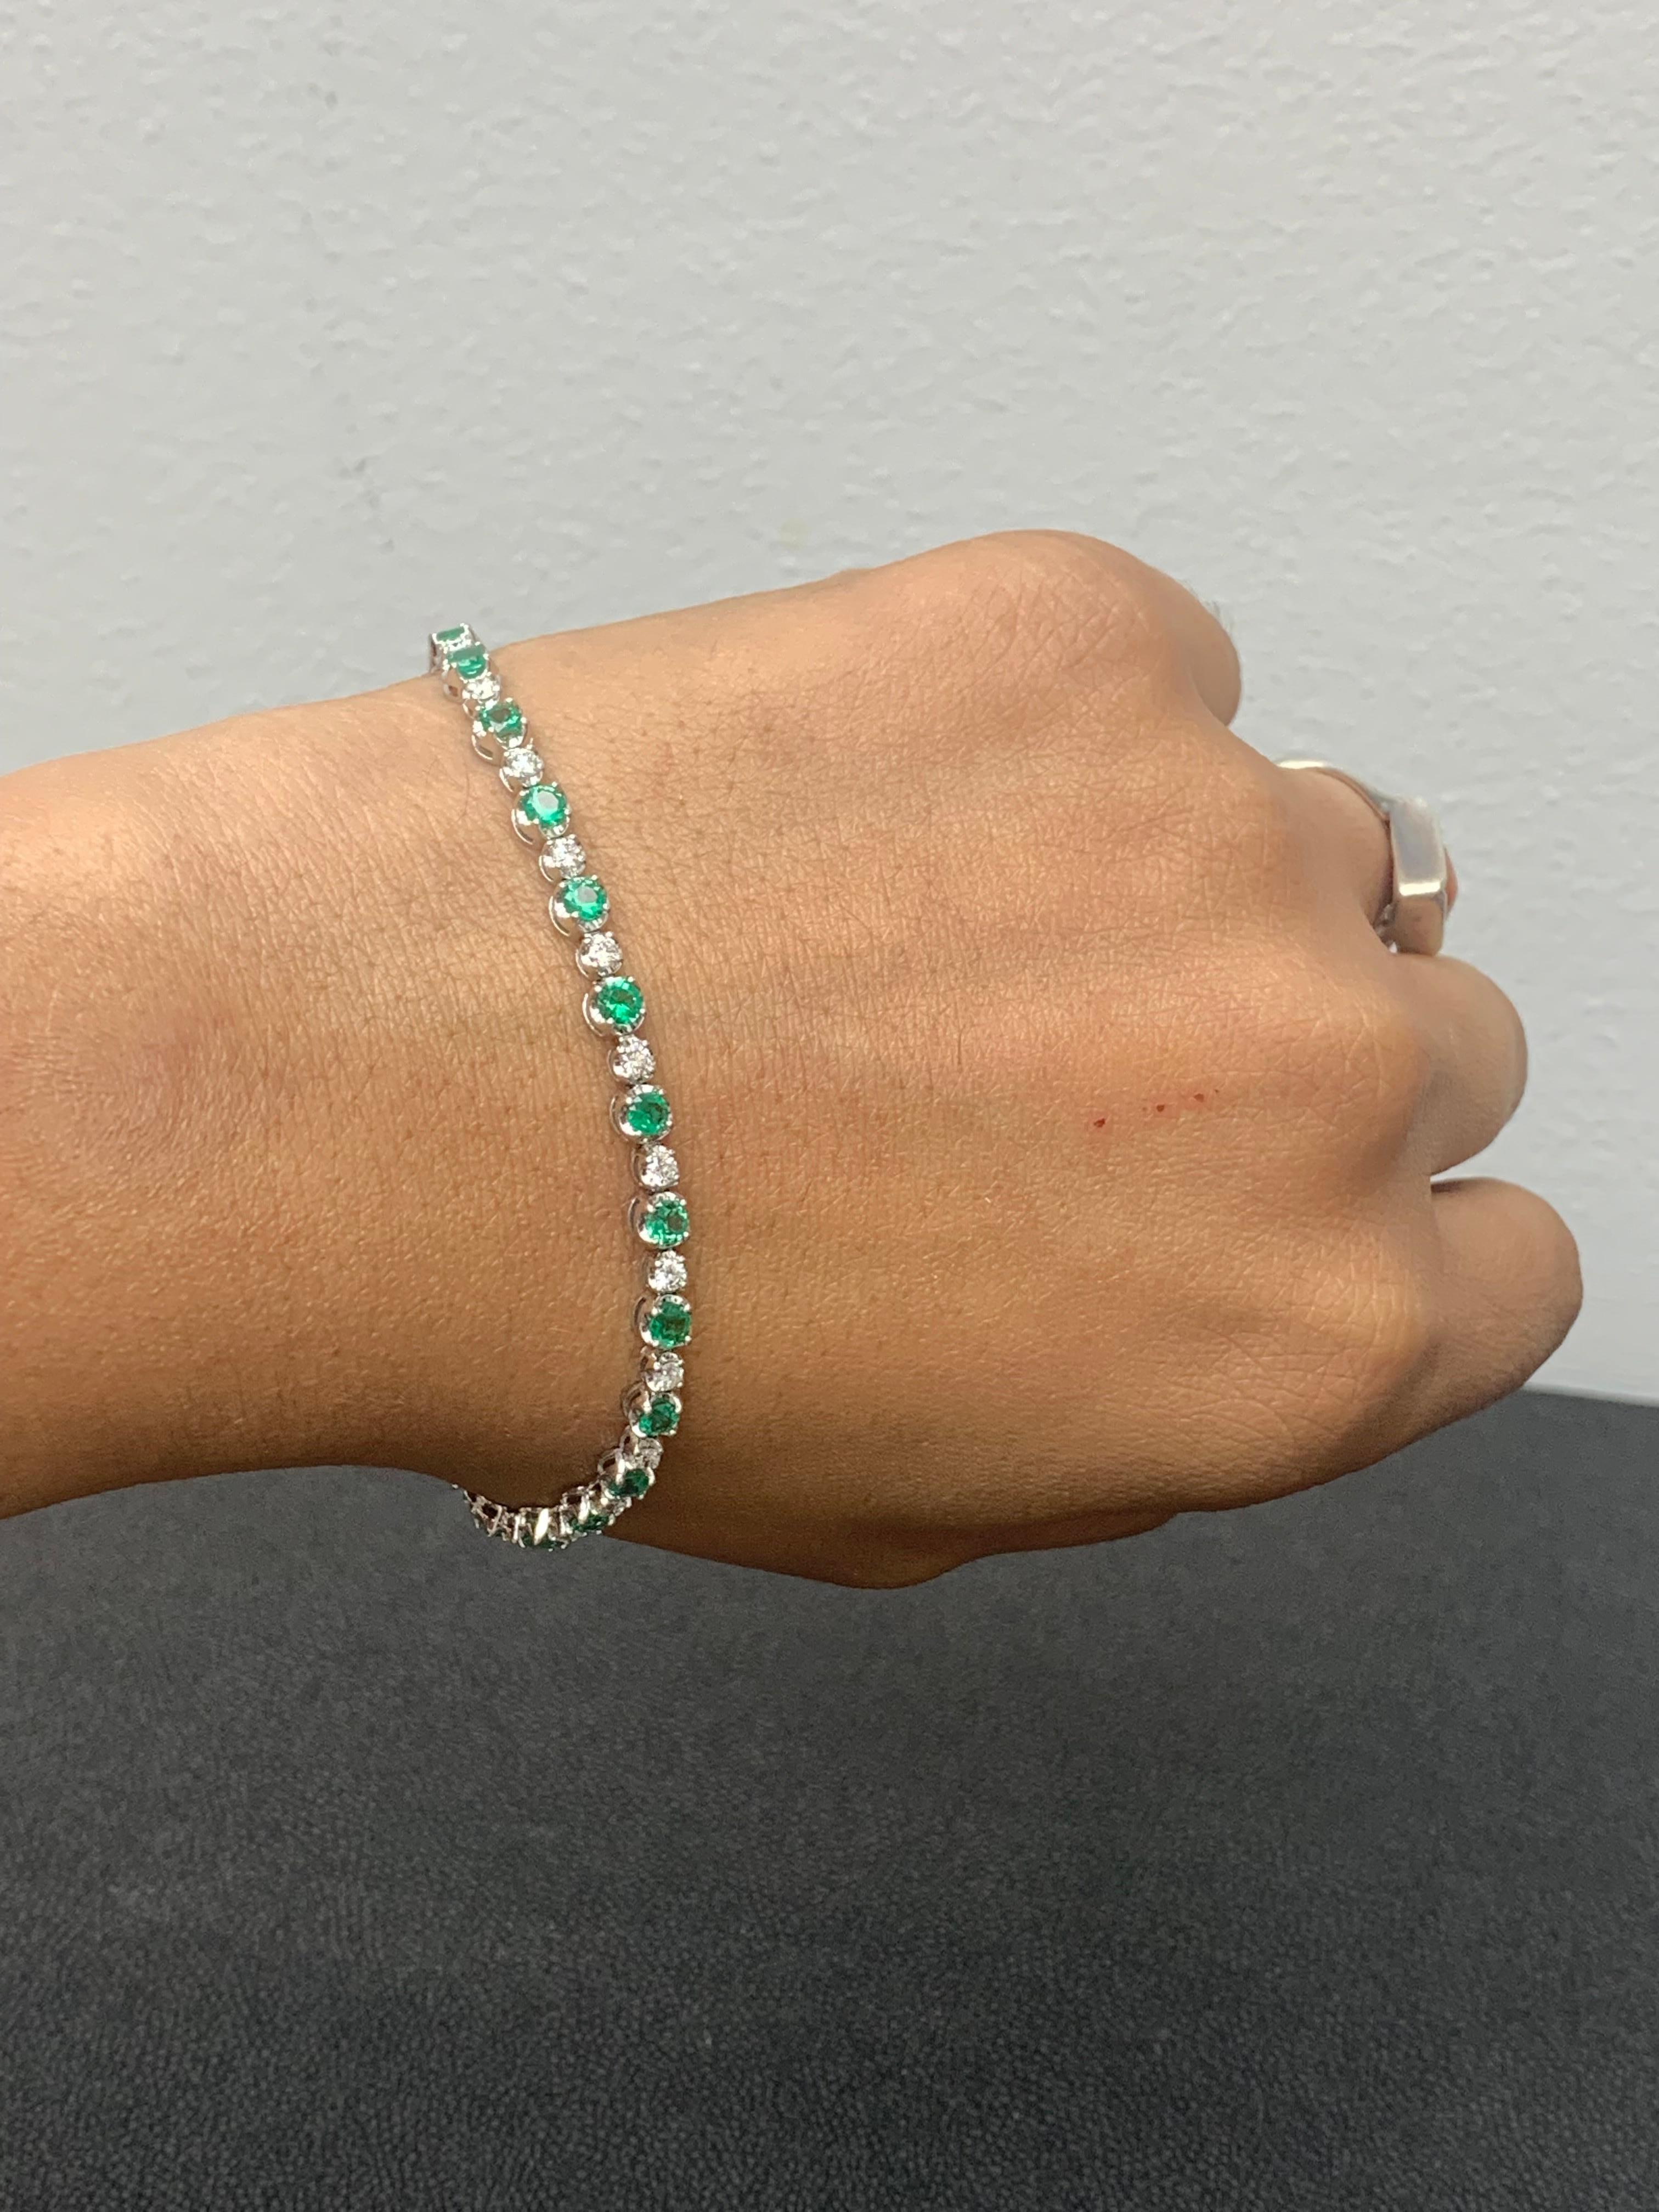 3.42 Carat Brilliant Cut Emerald and Diamond Bracelet in 14k White Gold For Sale 1